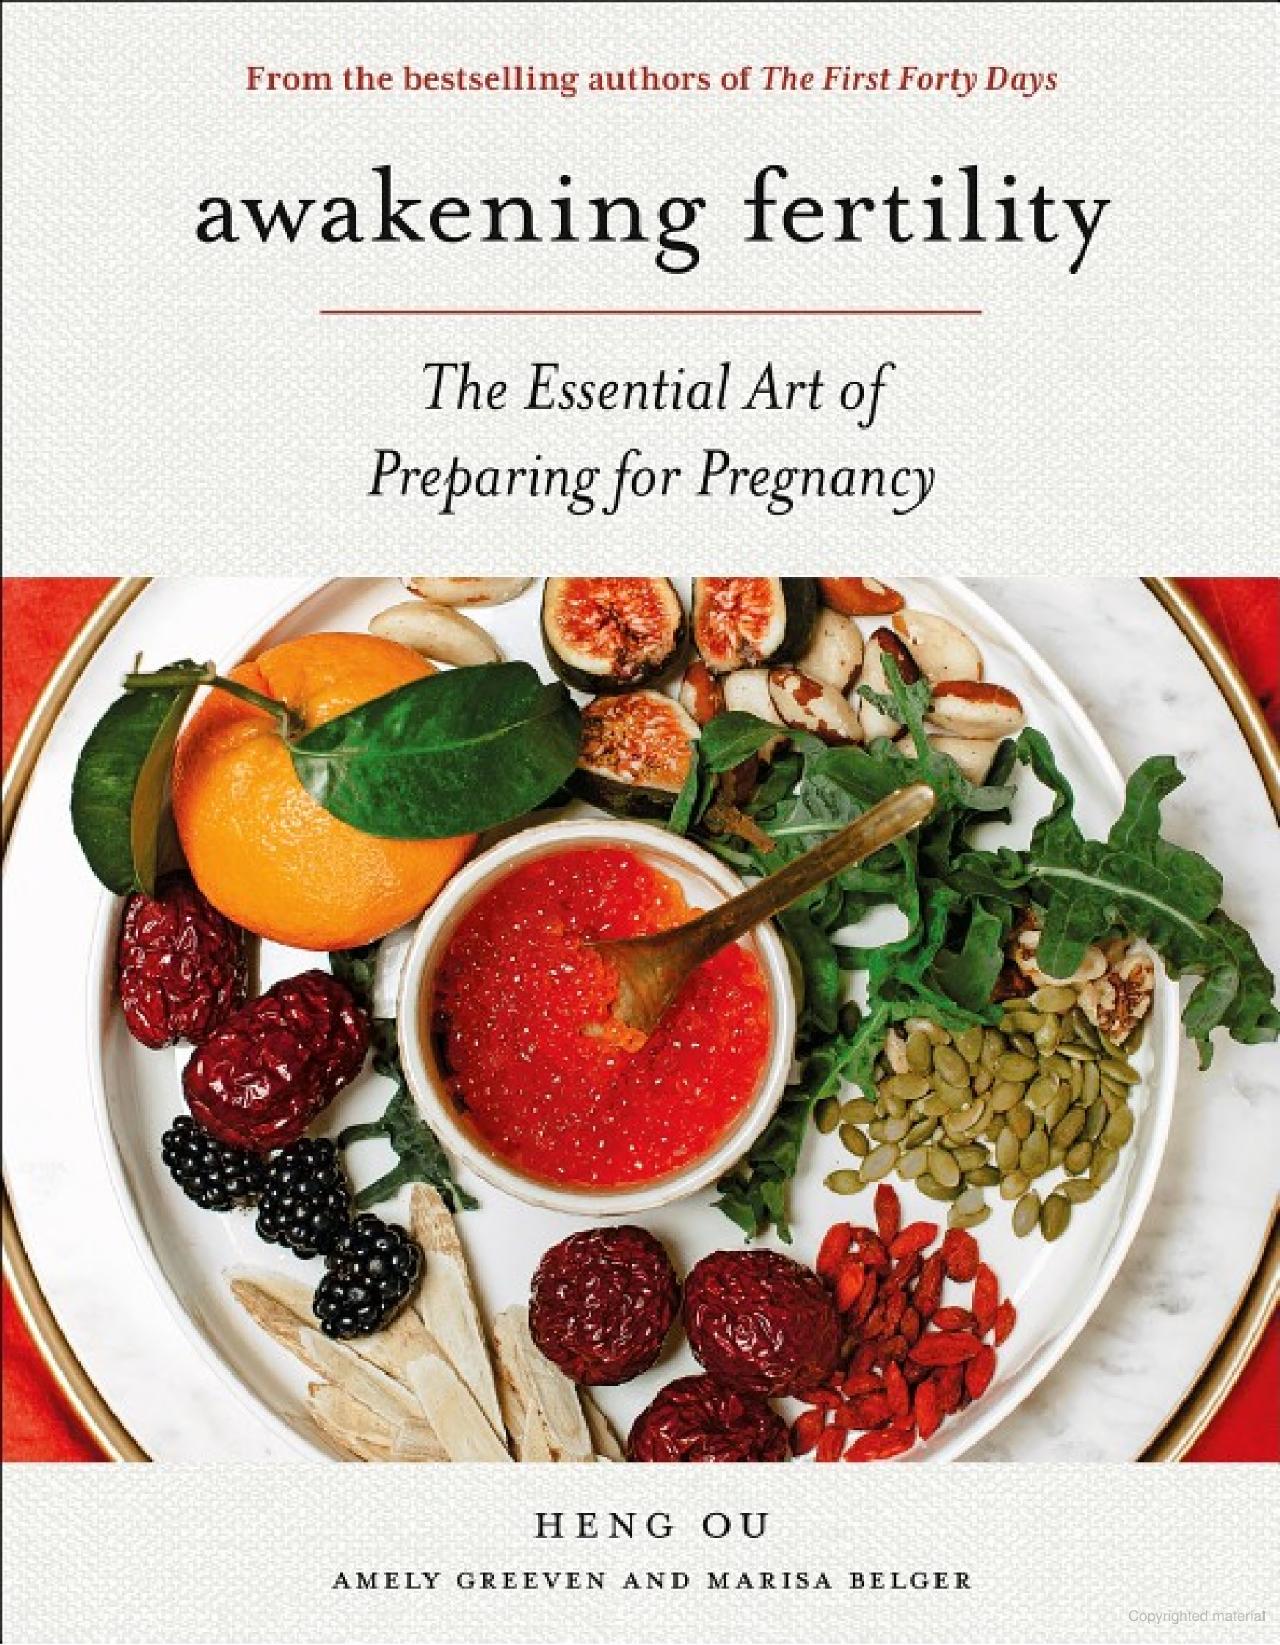 Awaking Fertility